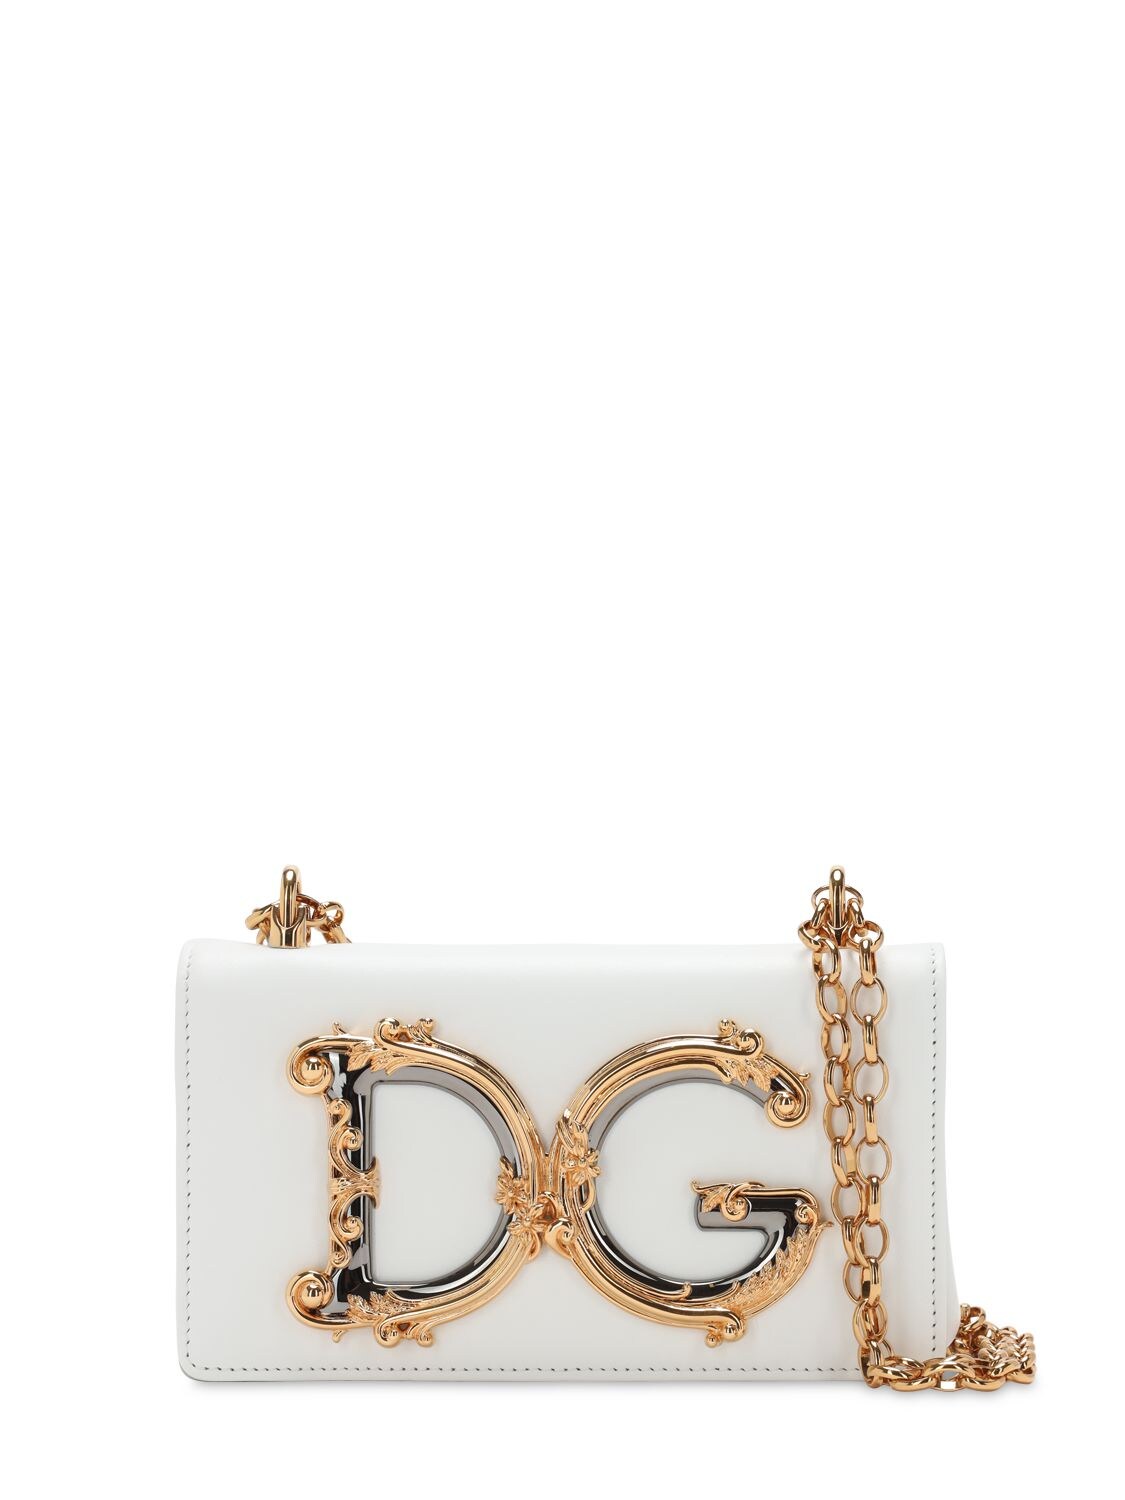 Dolce & Gabbana Dg Girl Leather Phone Bag In White